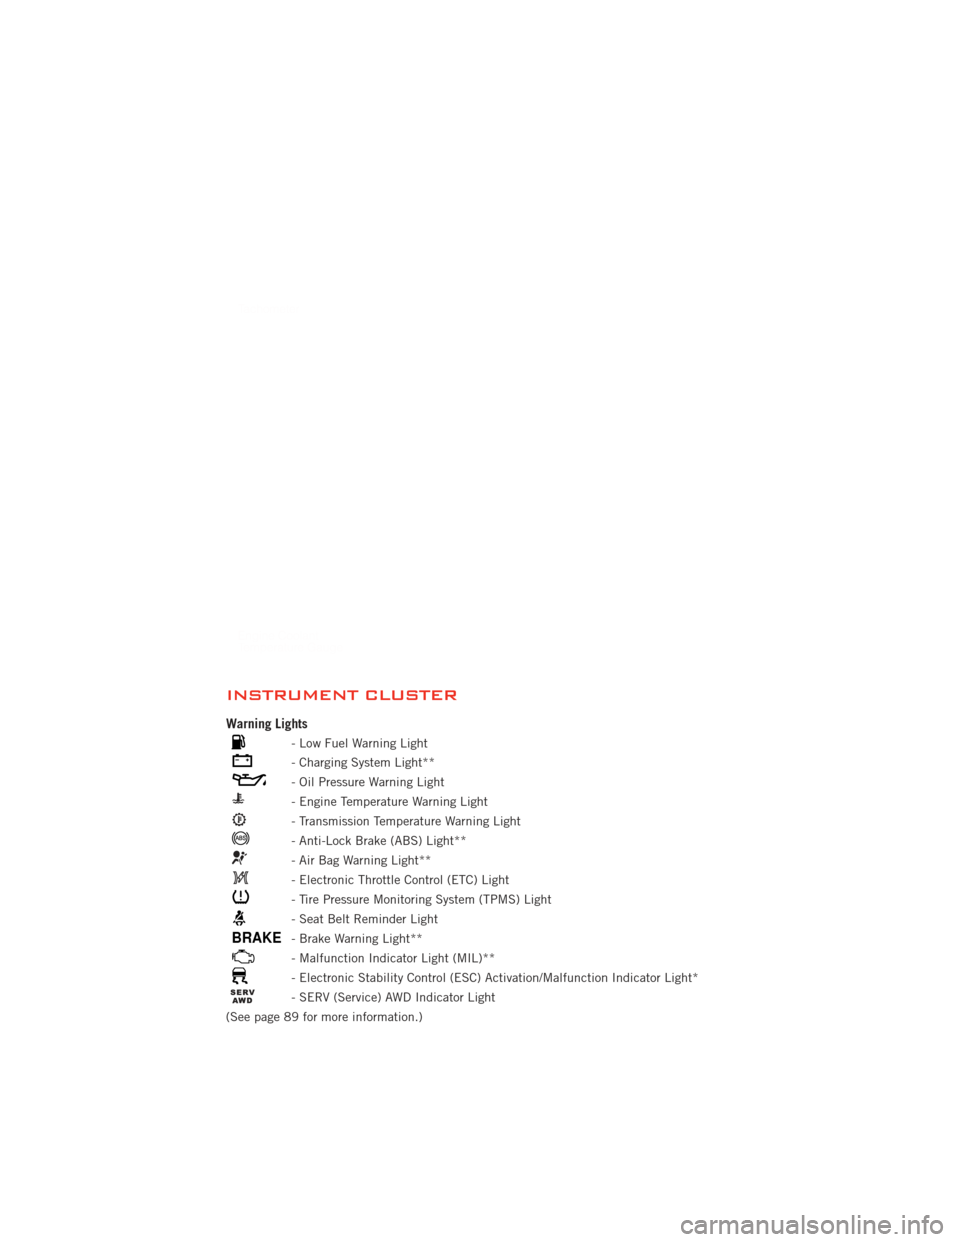 DODGE DURANGO 2012 3.G User Guide INSTRUMENT CLUSTER
Warning Lights
- Low Fuel Warning Light
- Charging System Light**
- Oil Pressure Warning Light
- Engine Temperature Warning Light
- Transmission Temperature Warning Light
- Anti-Loc